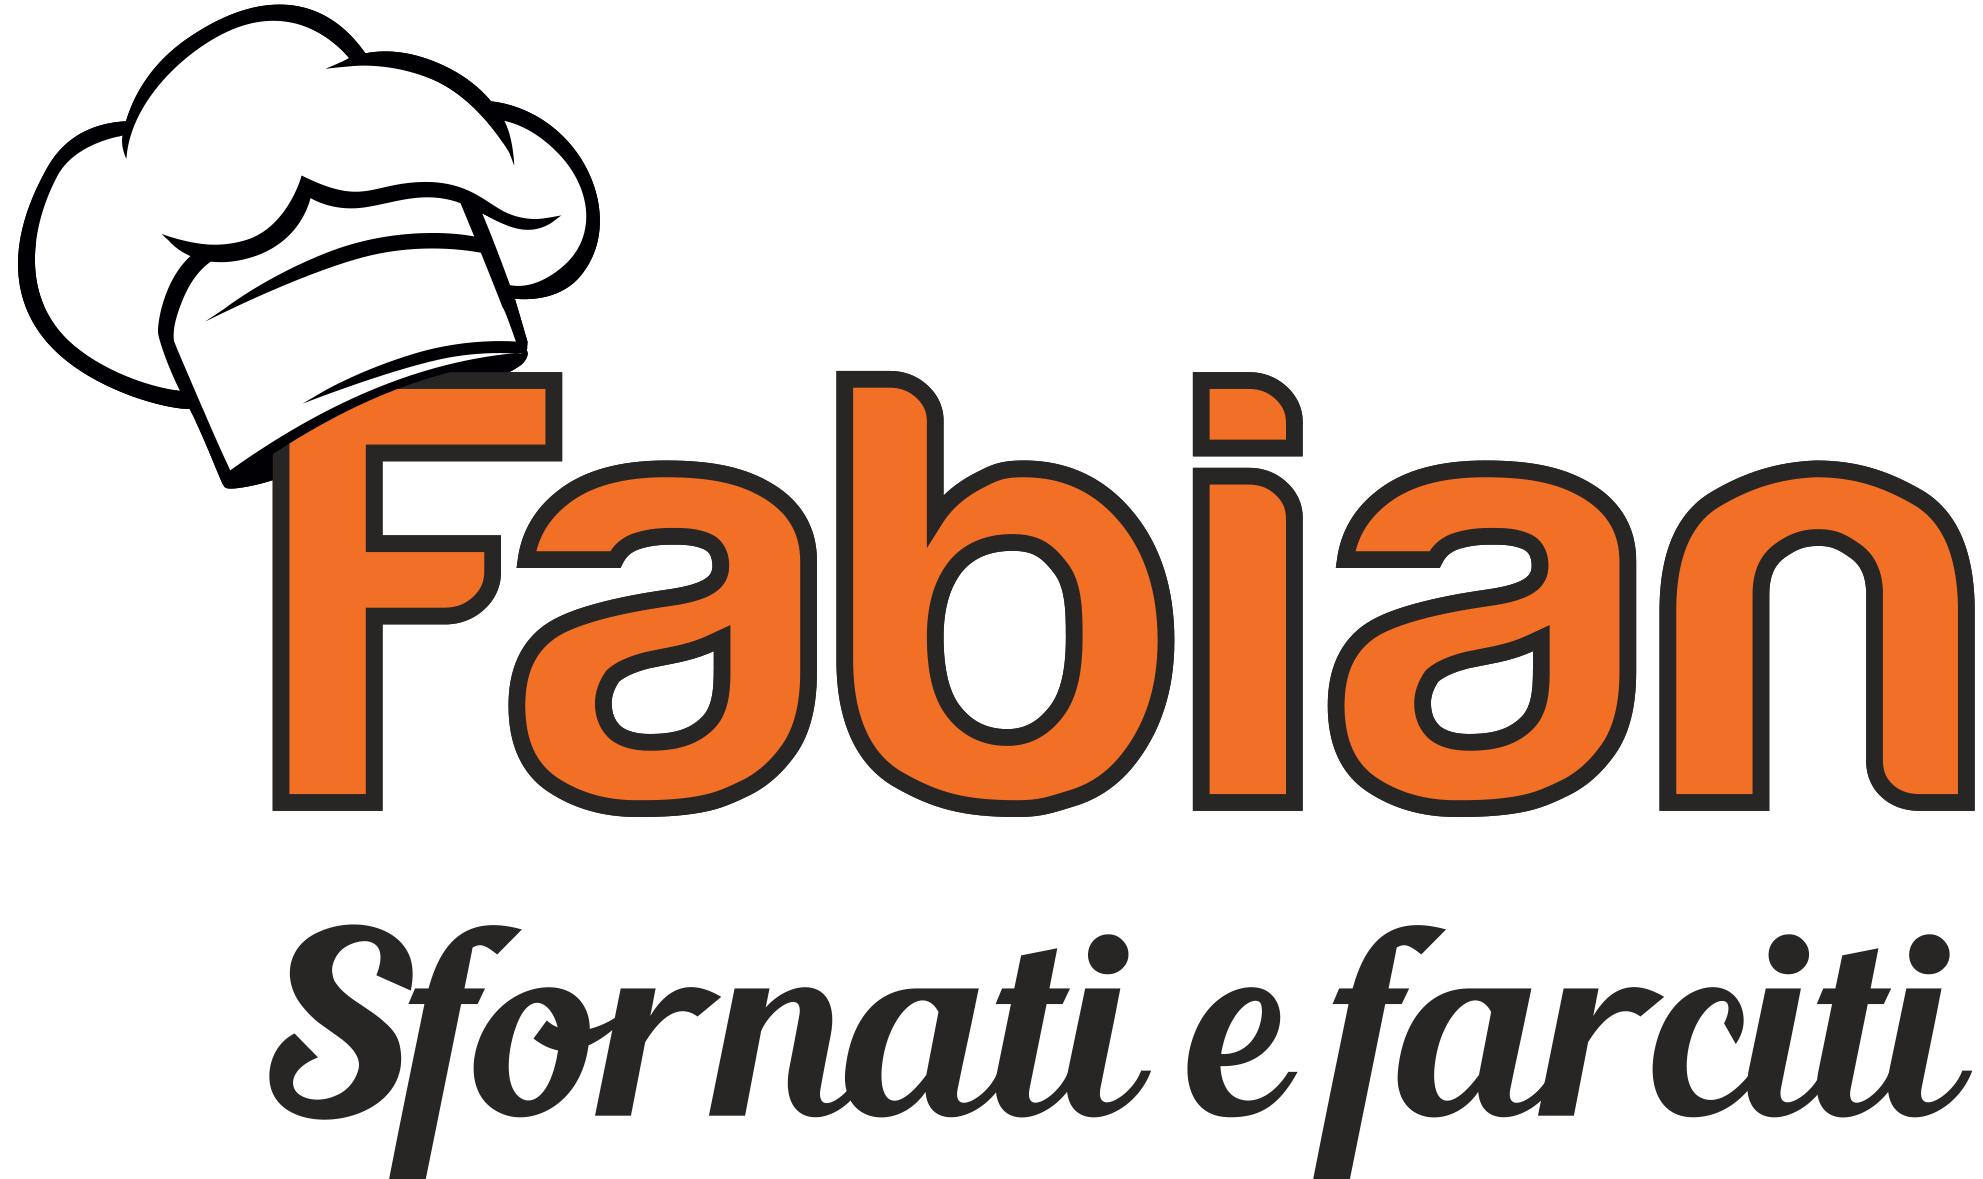 logo FABIAN 2018 vettoriale slogan nero